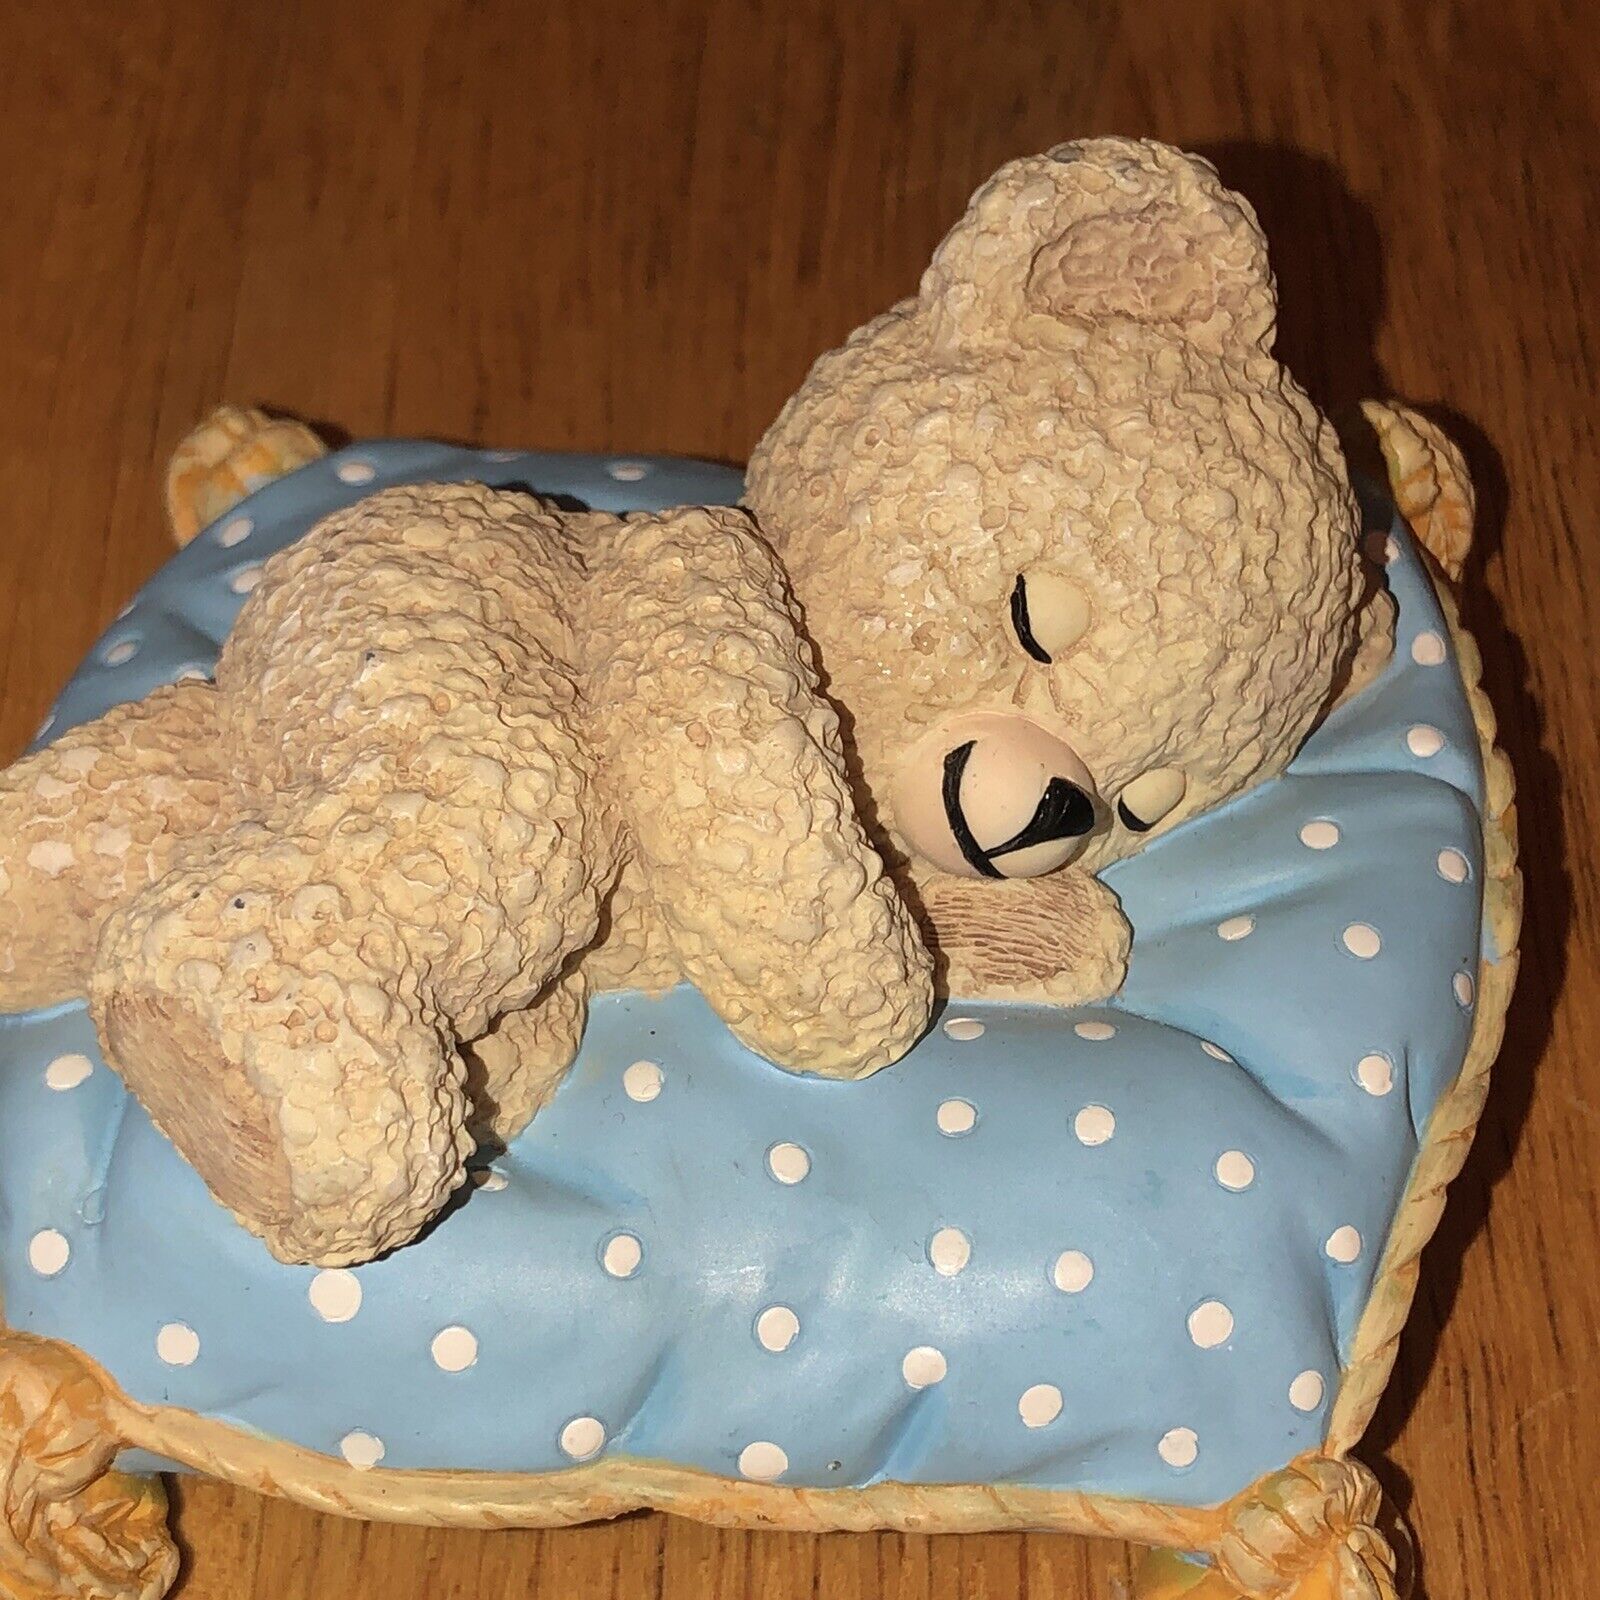 1998 Hamilton Collection Snuggle Bear Figurine Sweet Dream Snuggle NICE